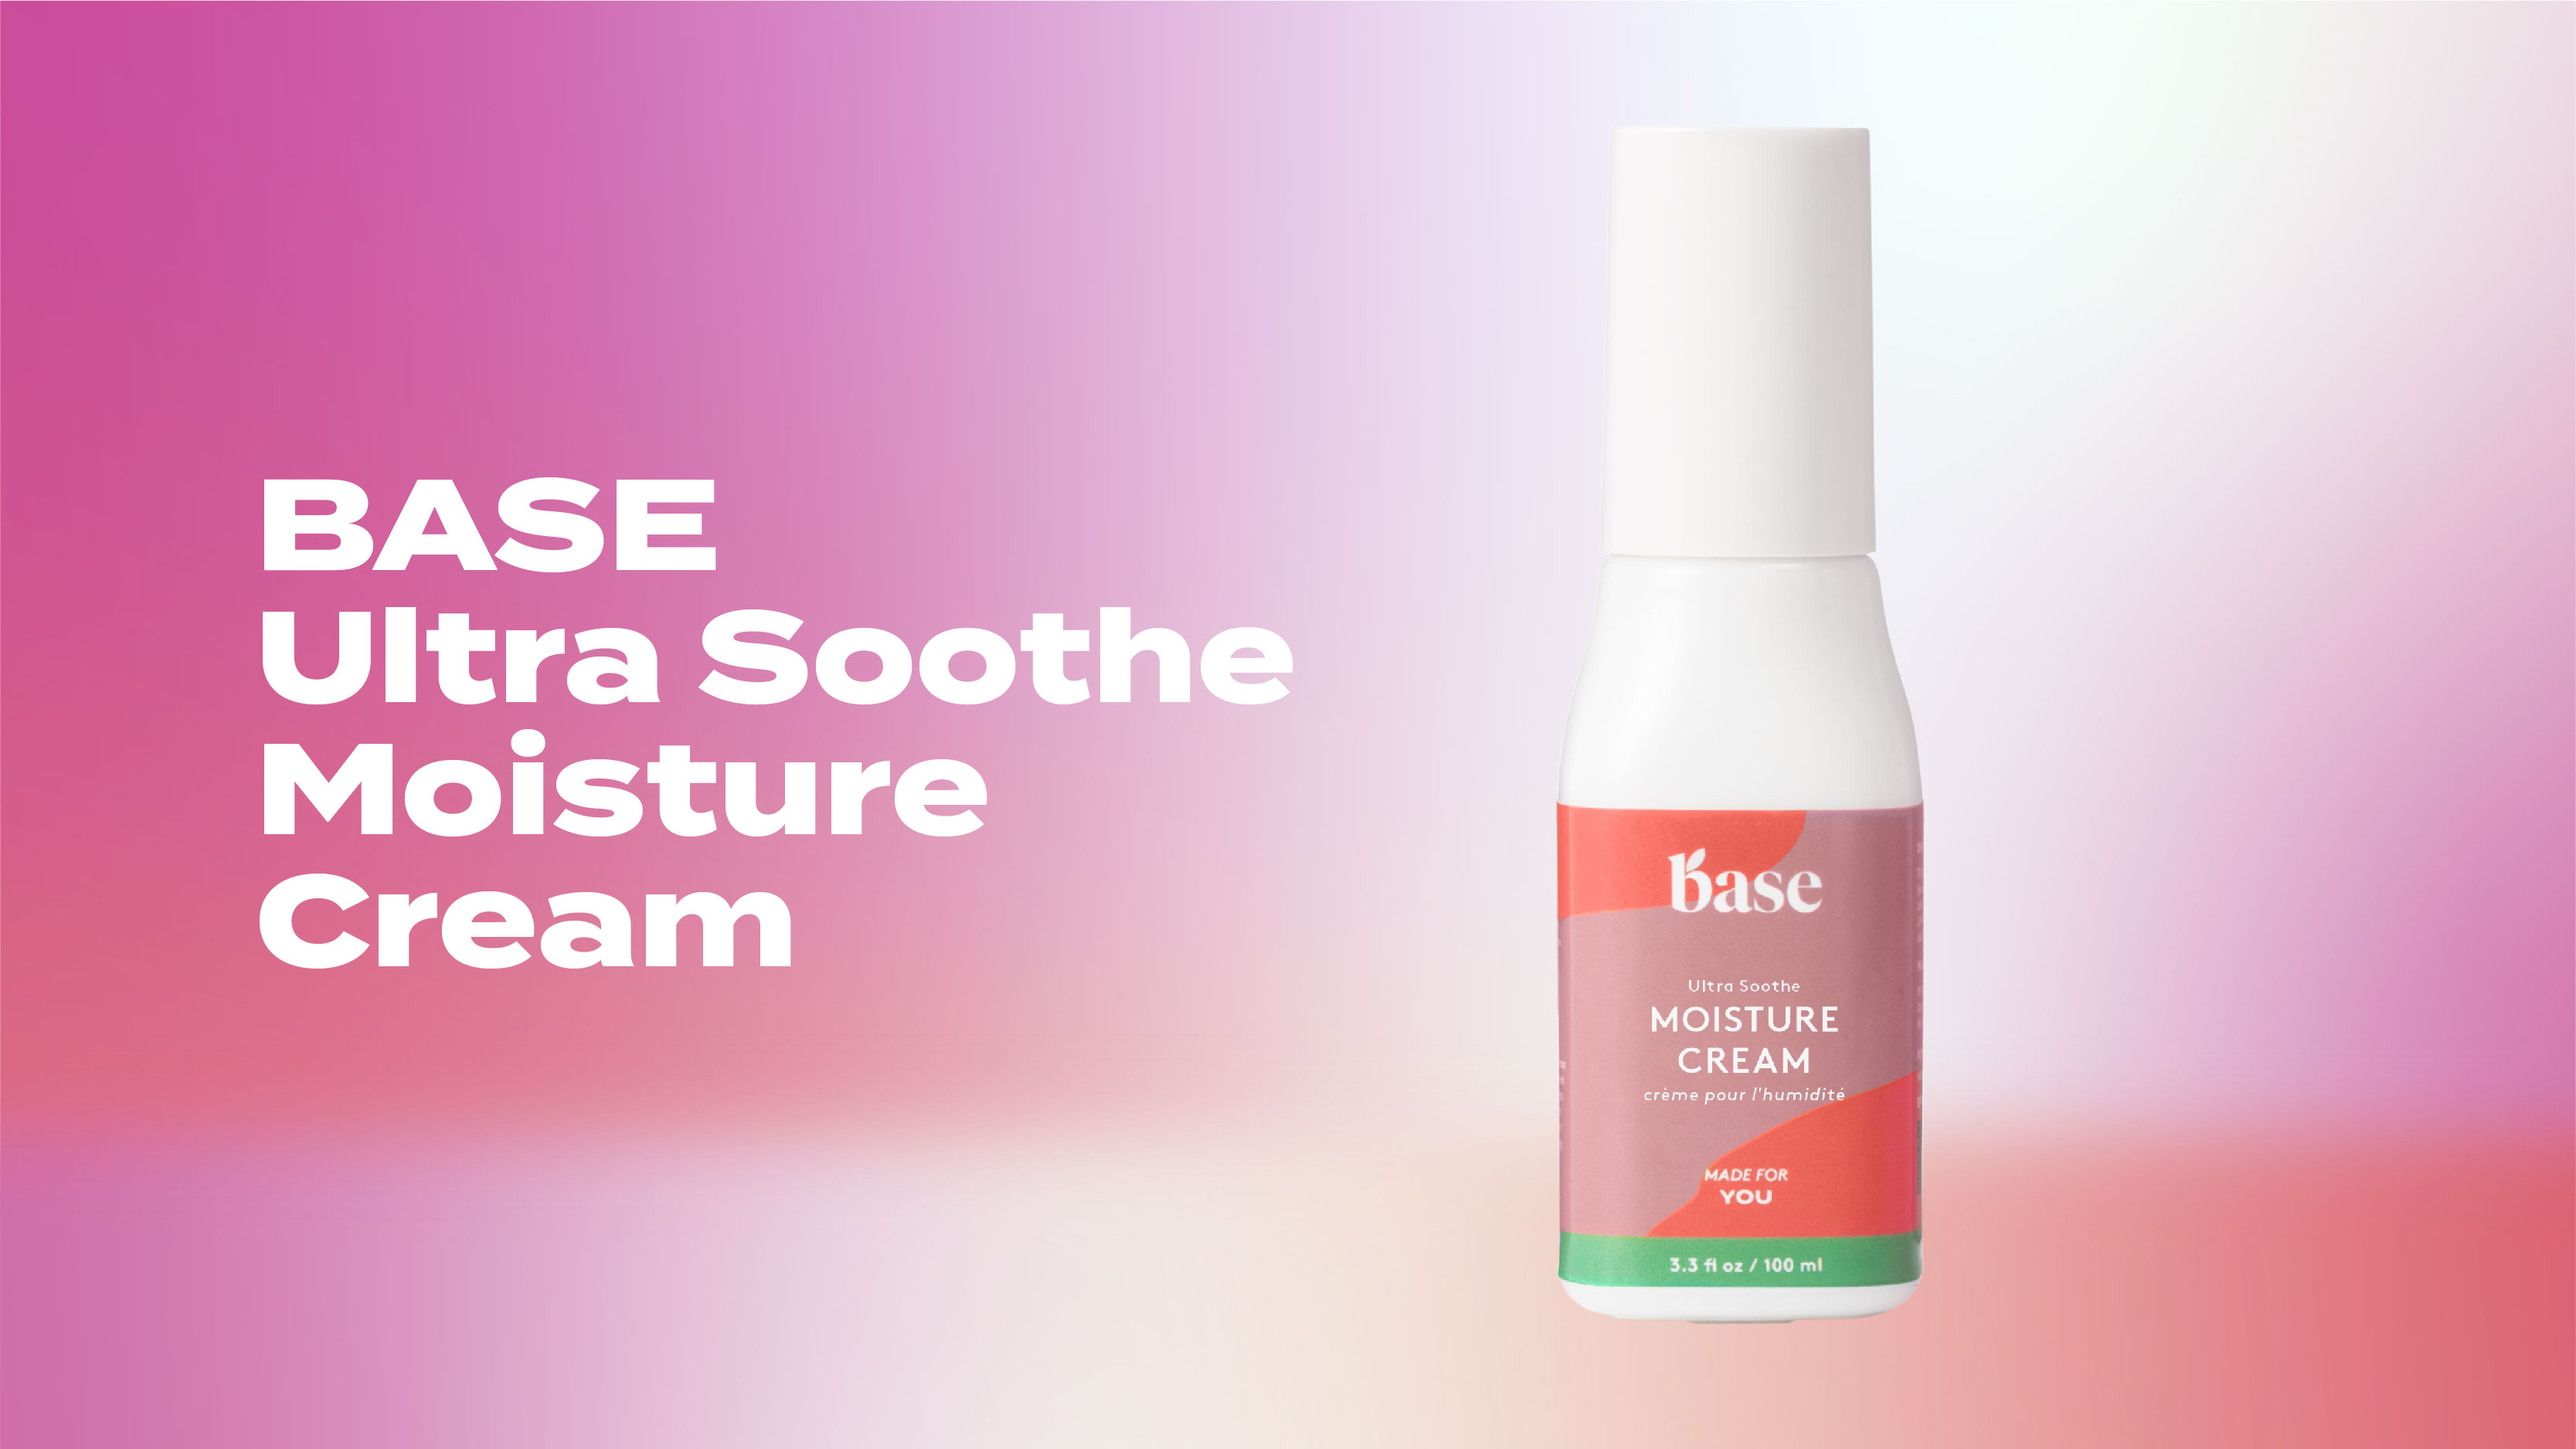 BASE ultra soothe moisture cream